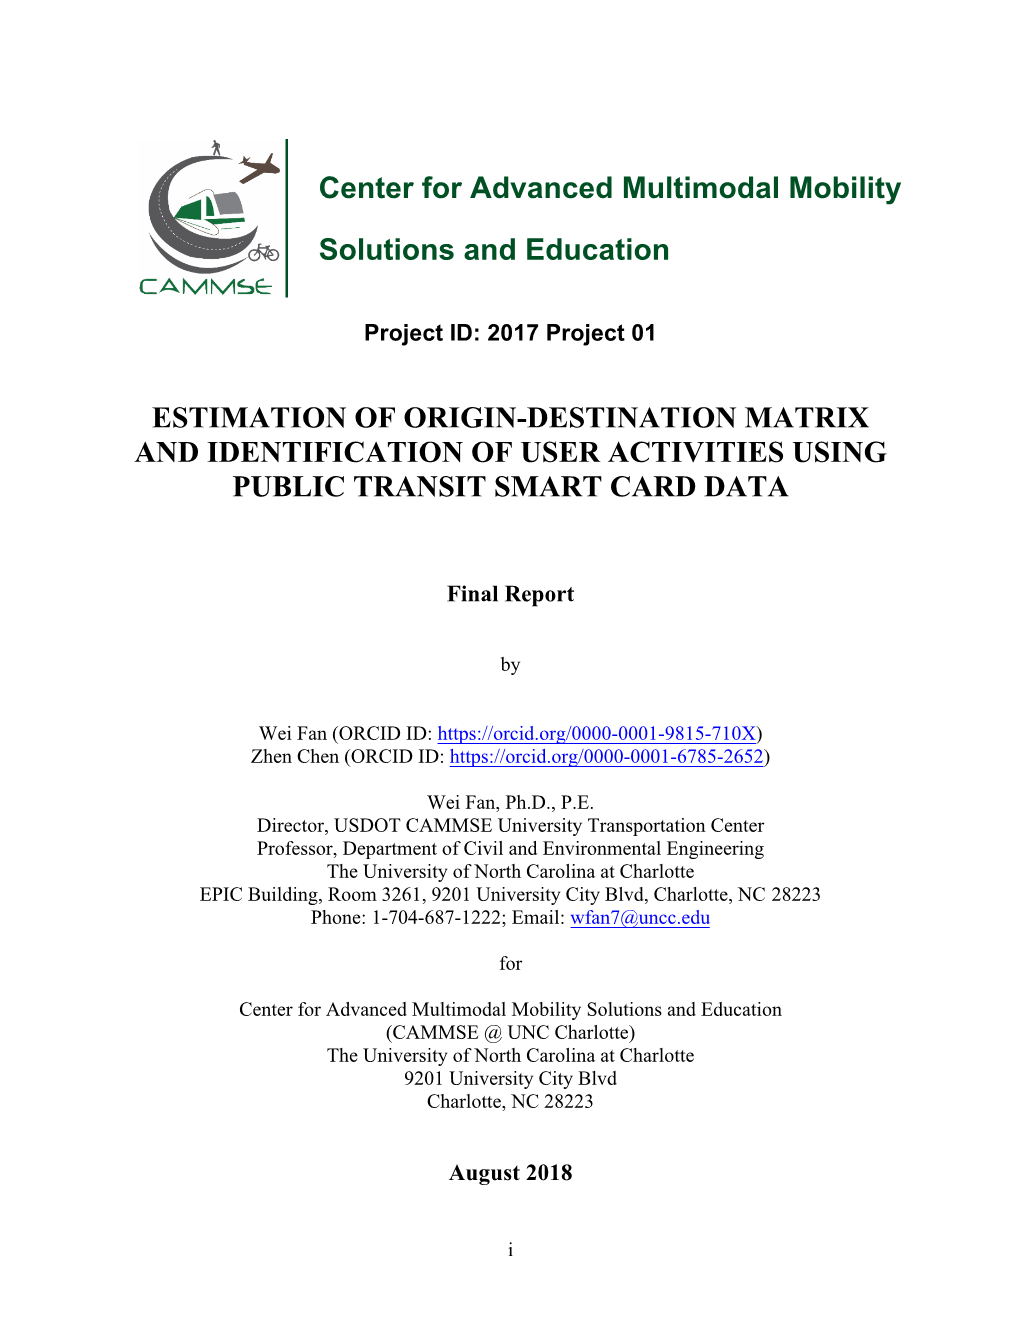 Estimation of Origin-Destination Matrix and Identification of User Activities Using Public Transit Smart Card Data